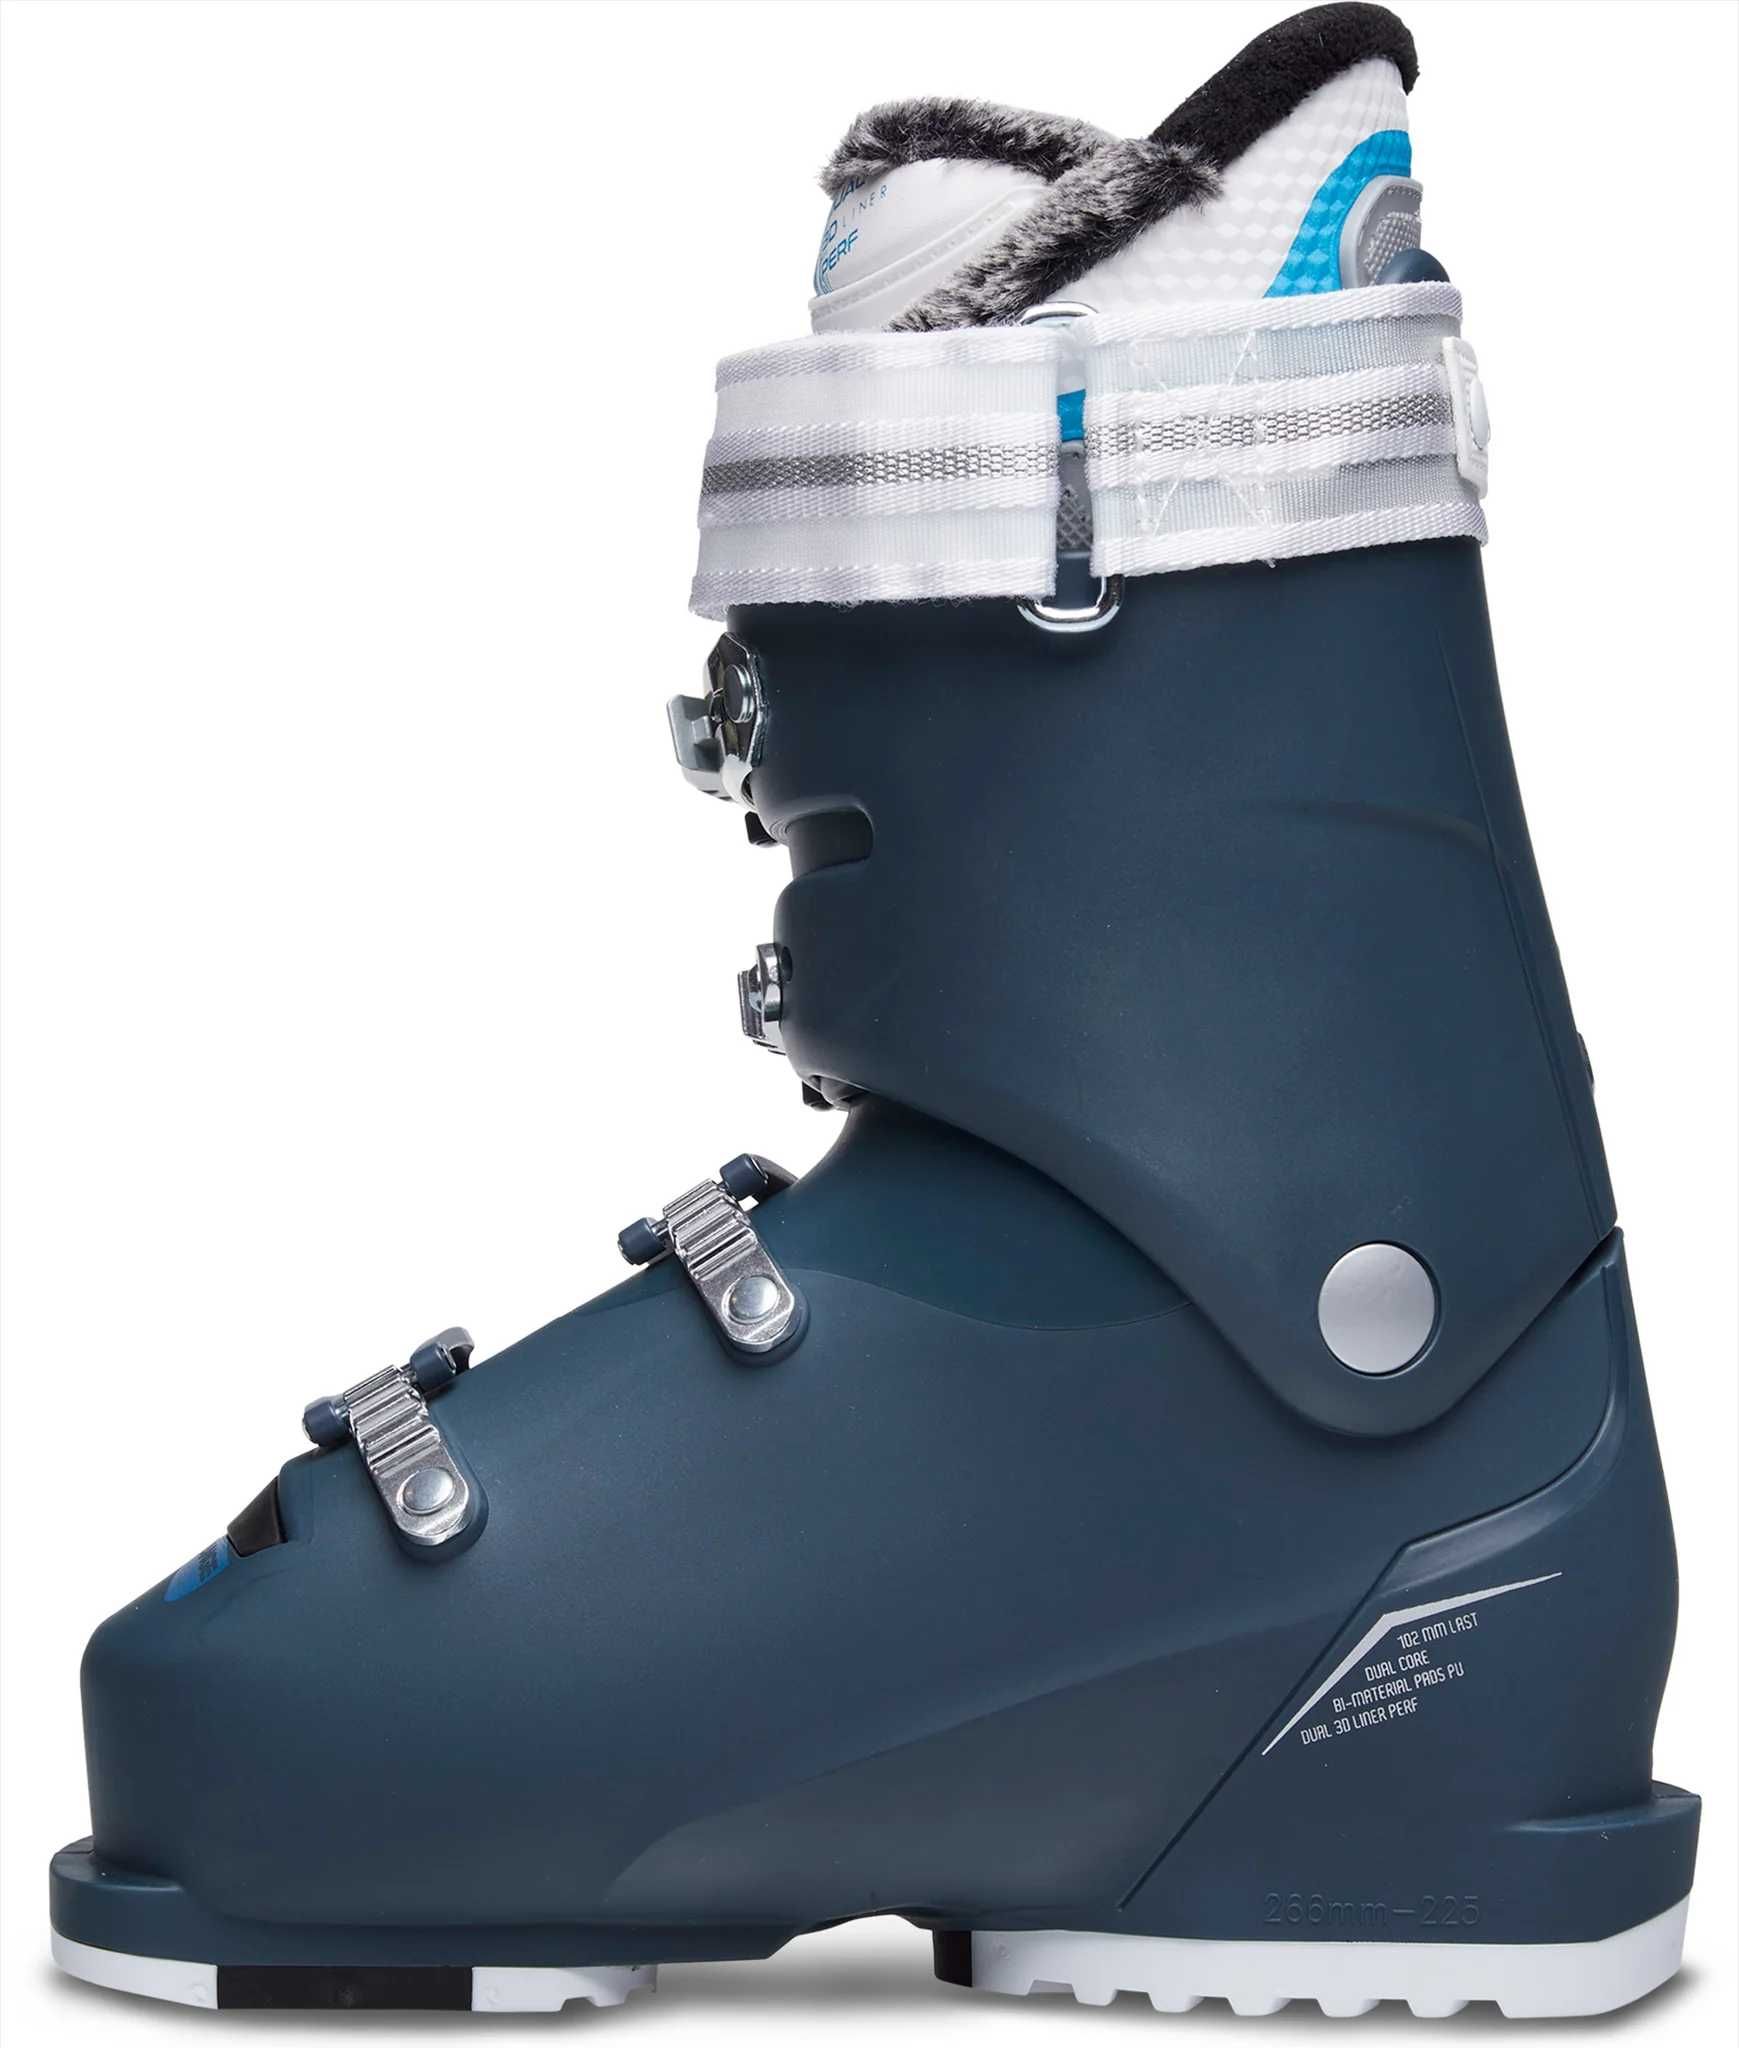 LANGE LX 90, 27.5 (43), нови, оригинални дамски/унисекс ски обувки